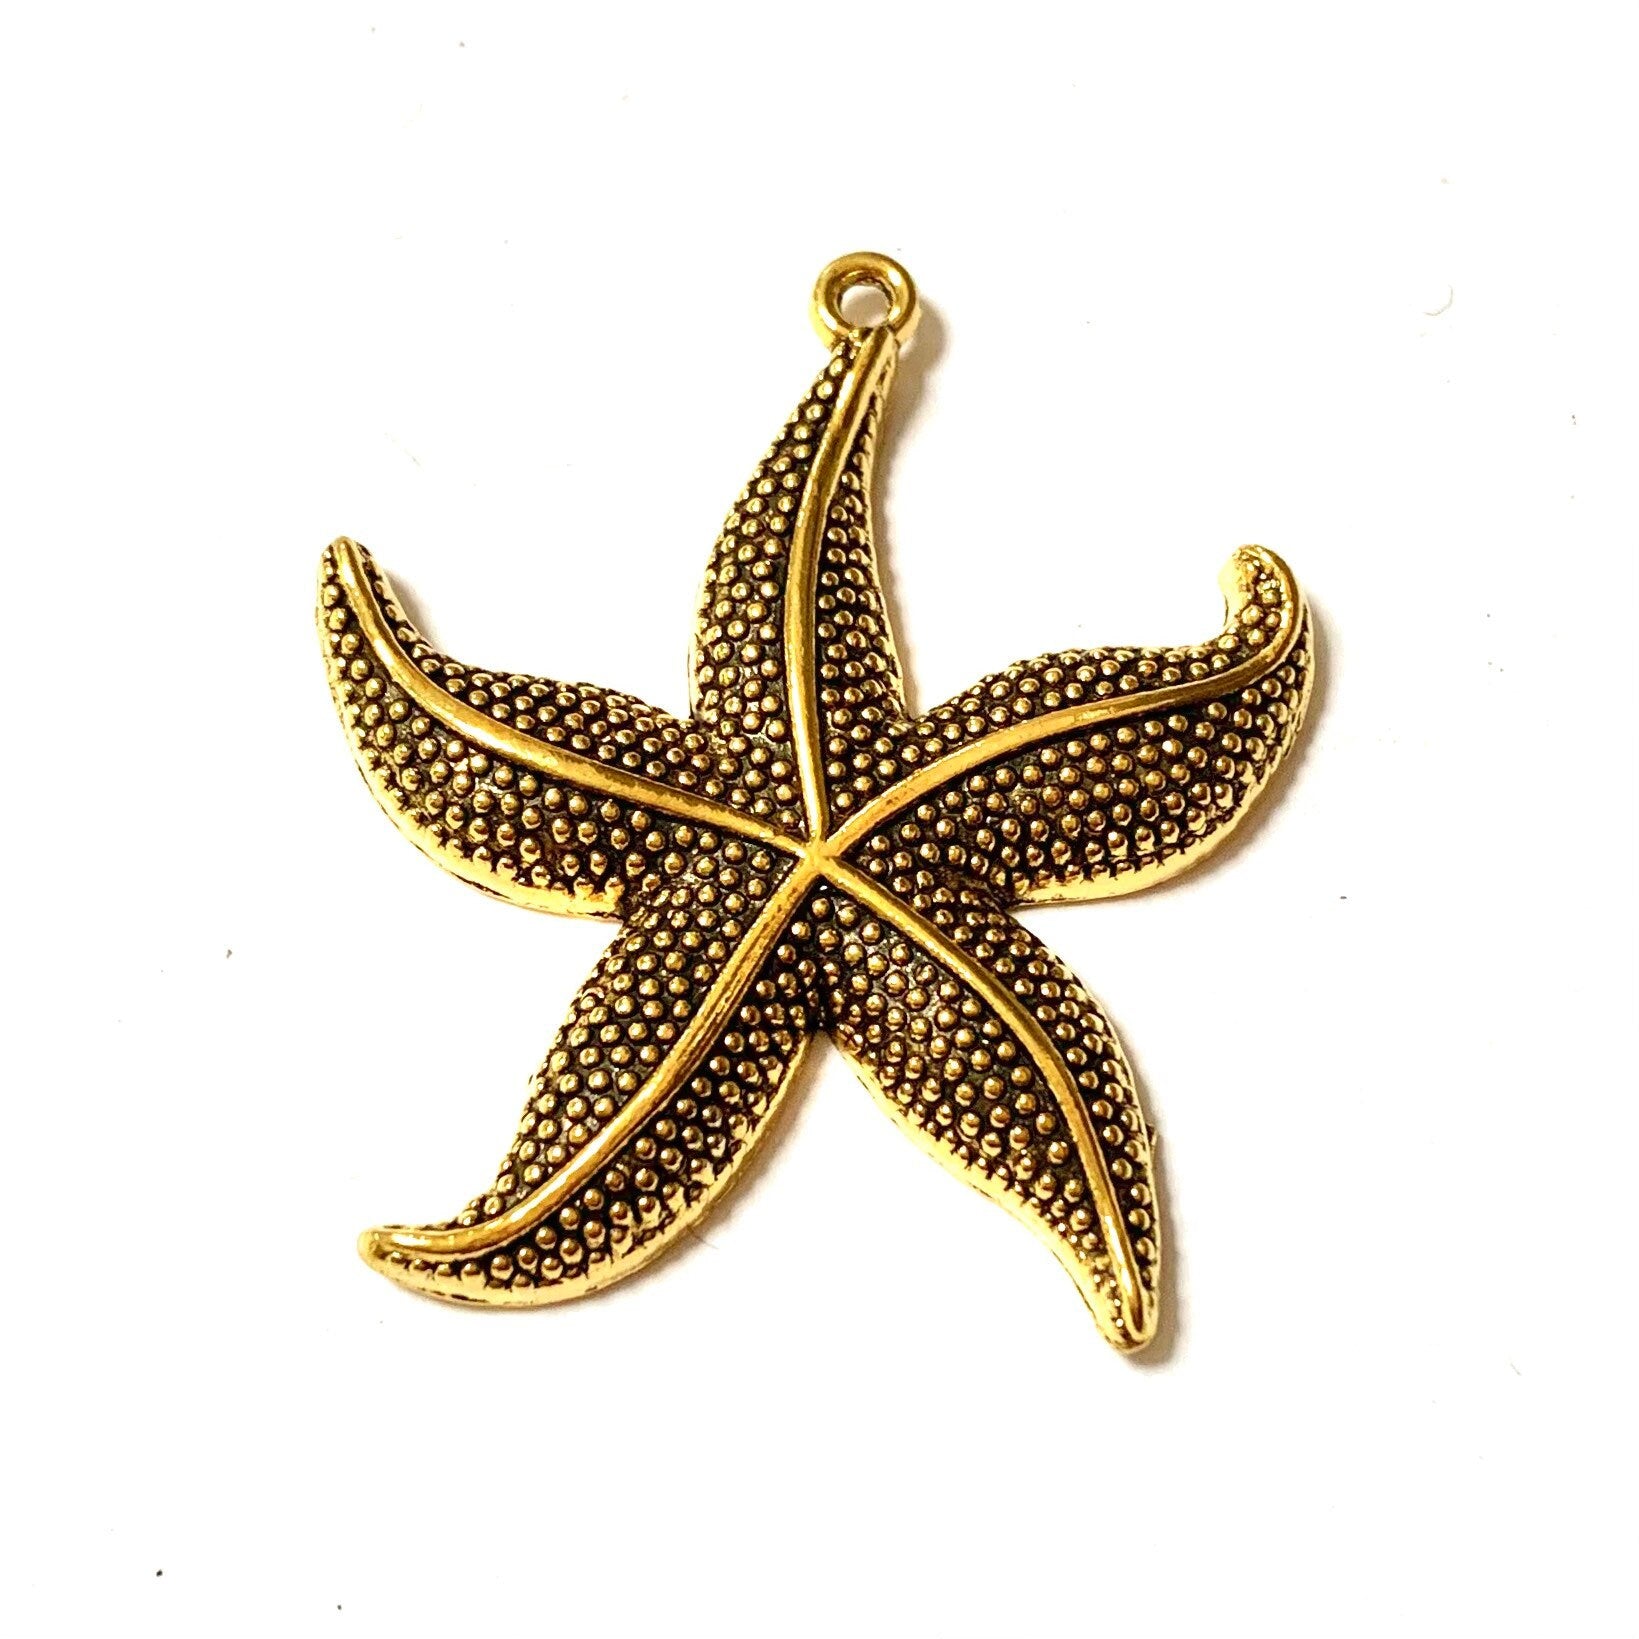 Large Starfish Pendant - Antique Gold Tone - Beautiful Detailing